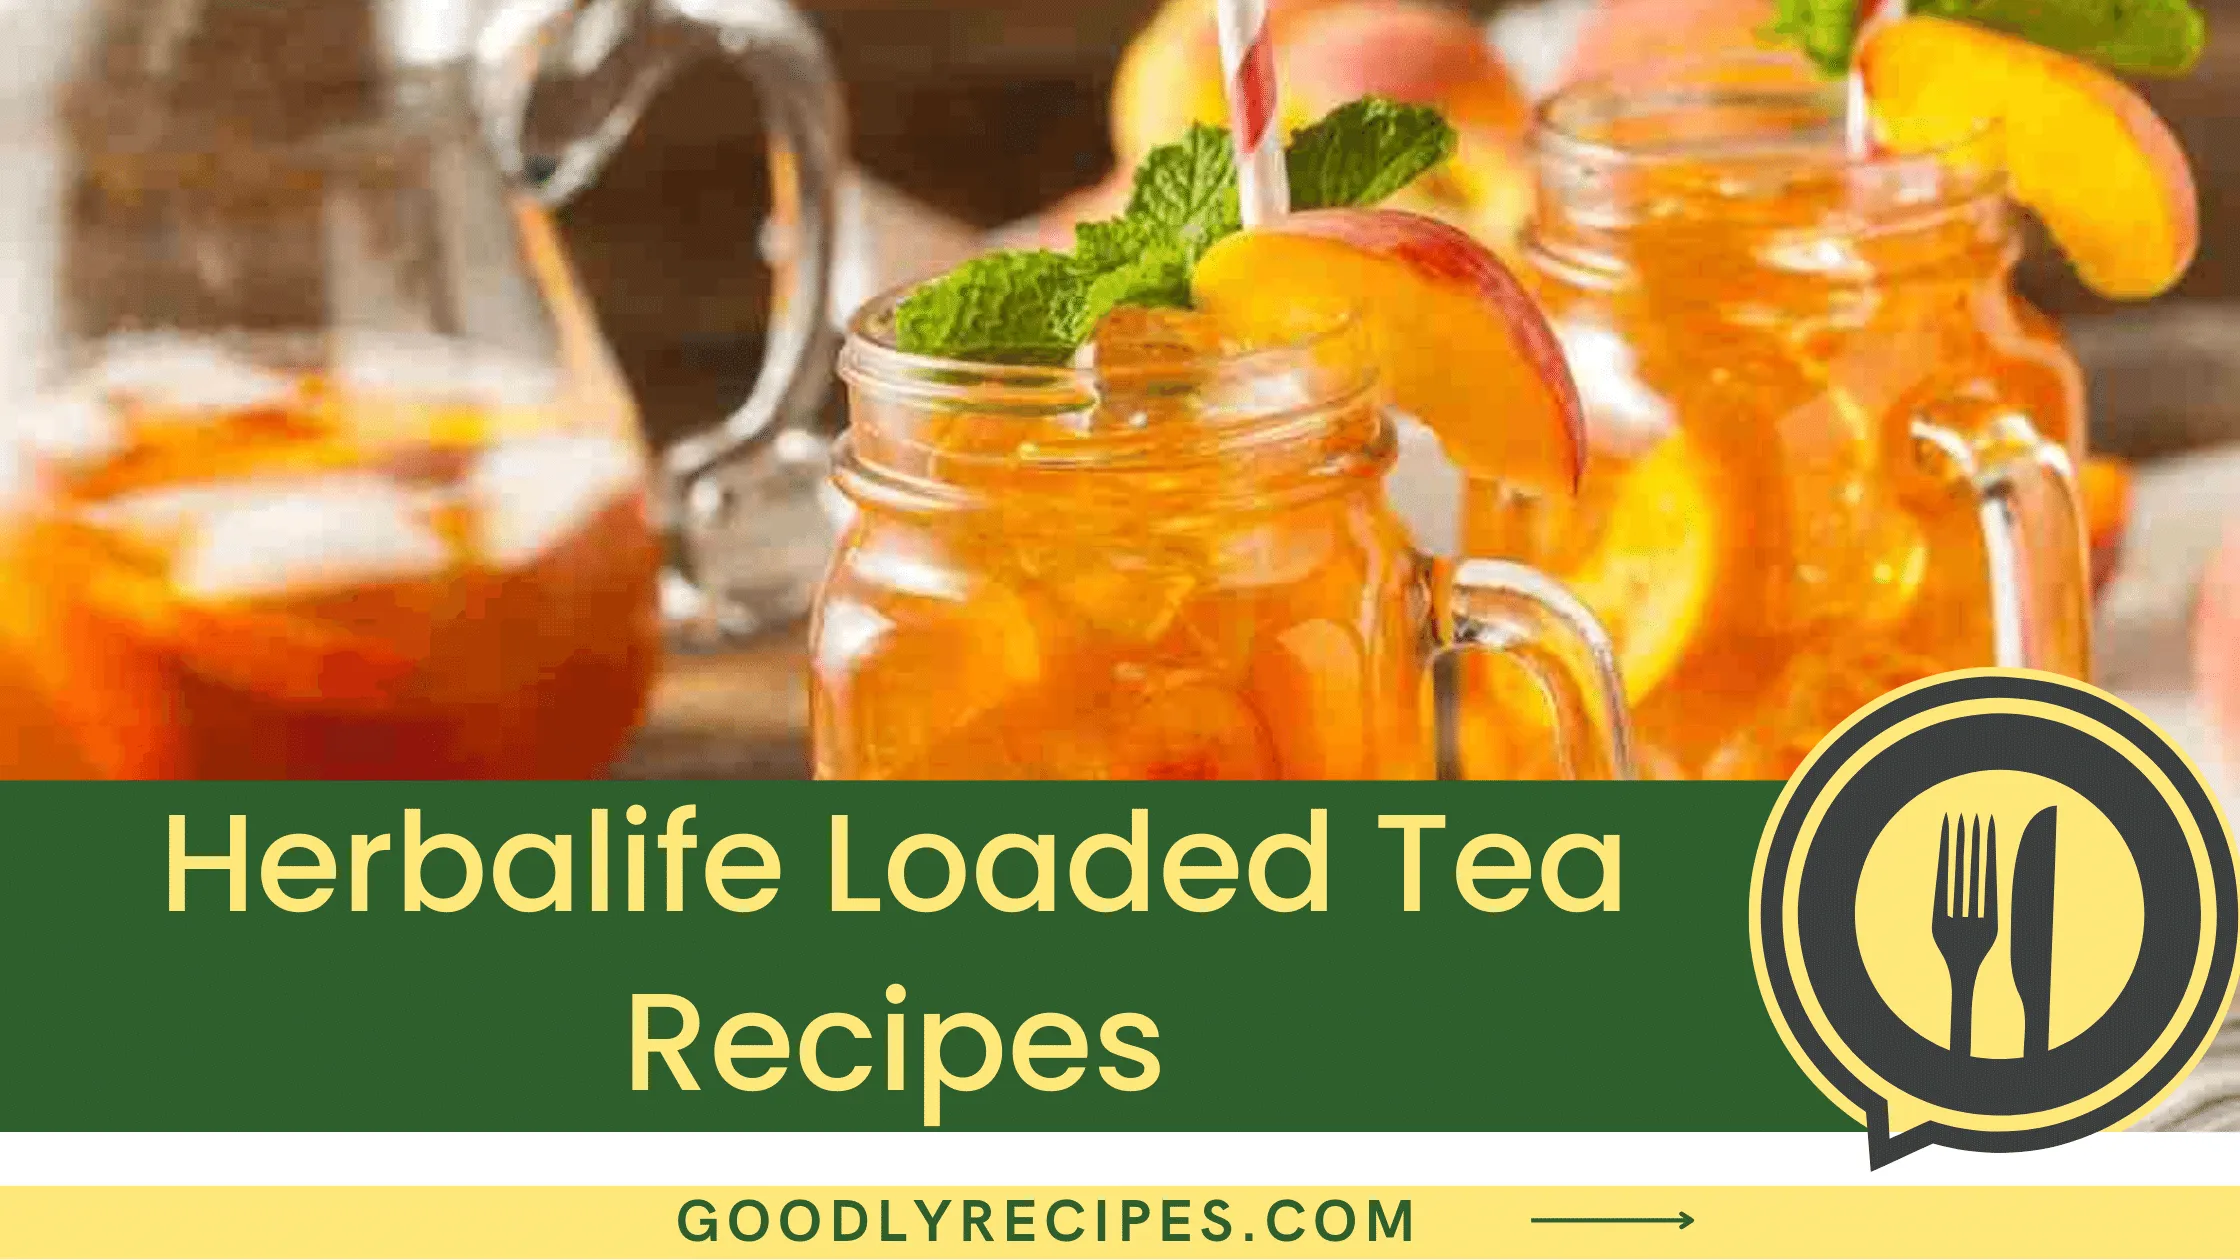 Herbalife Loaded Tea Recipe - For Food Lovers